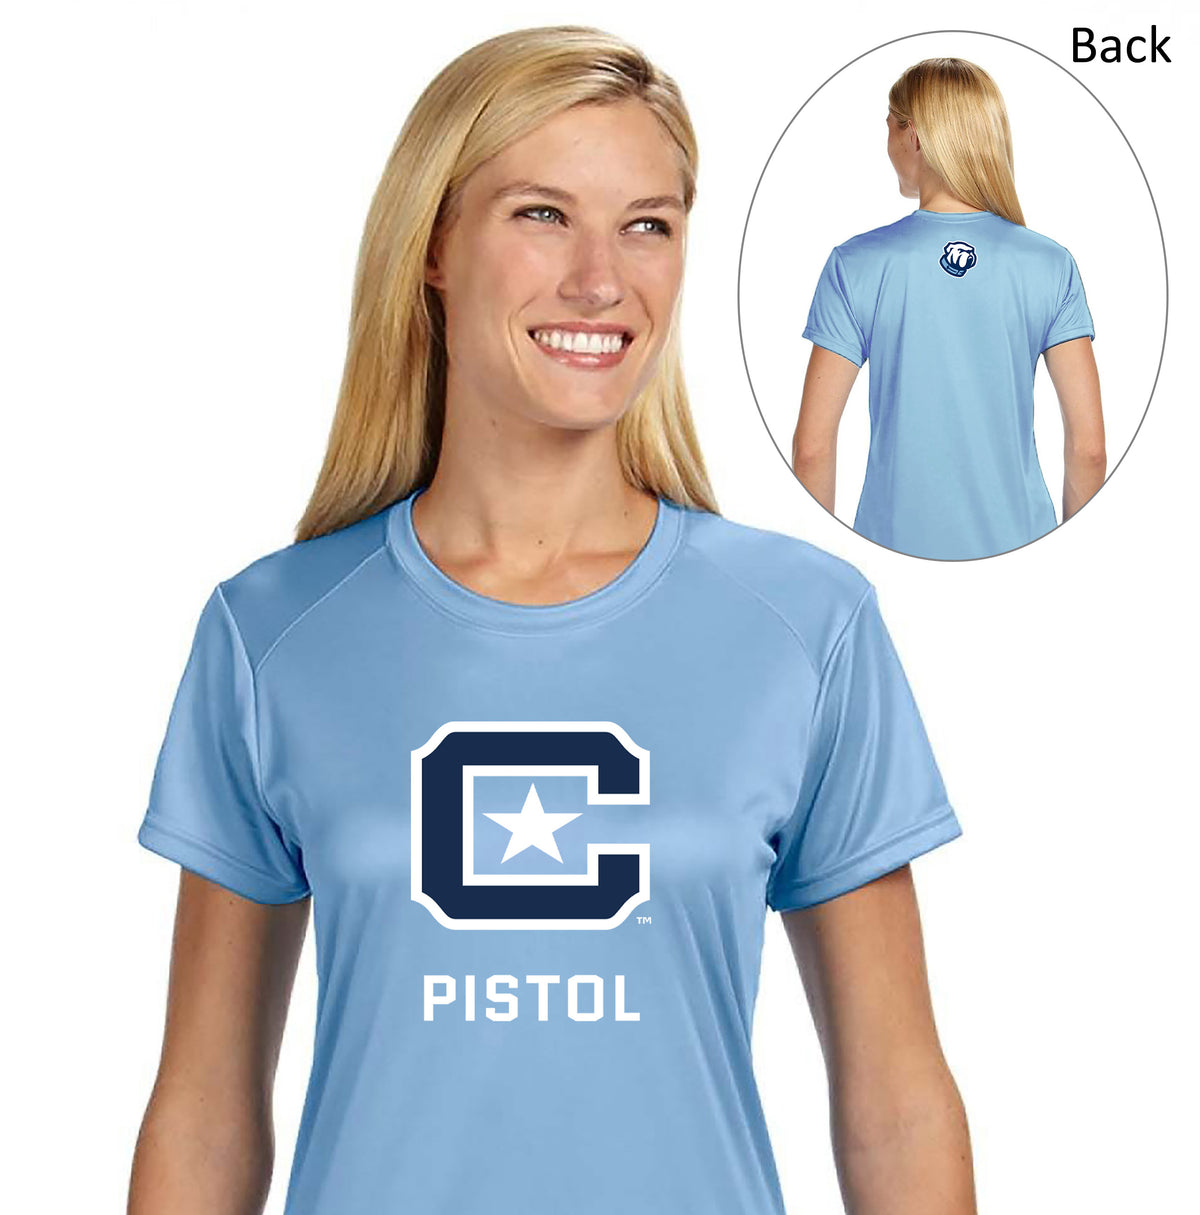 The Citadel, Club Sports - Pistol, A4 Ladies' Cooling Performance T-Shirt-Carolina Blue